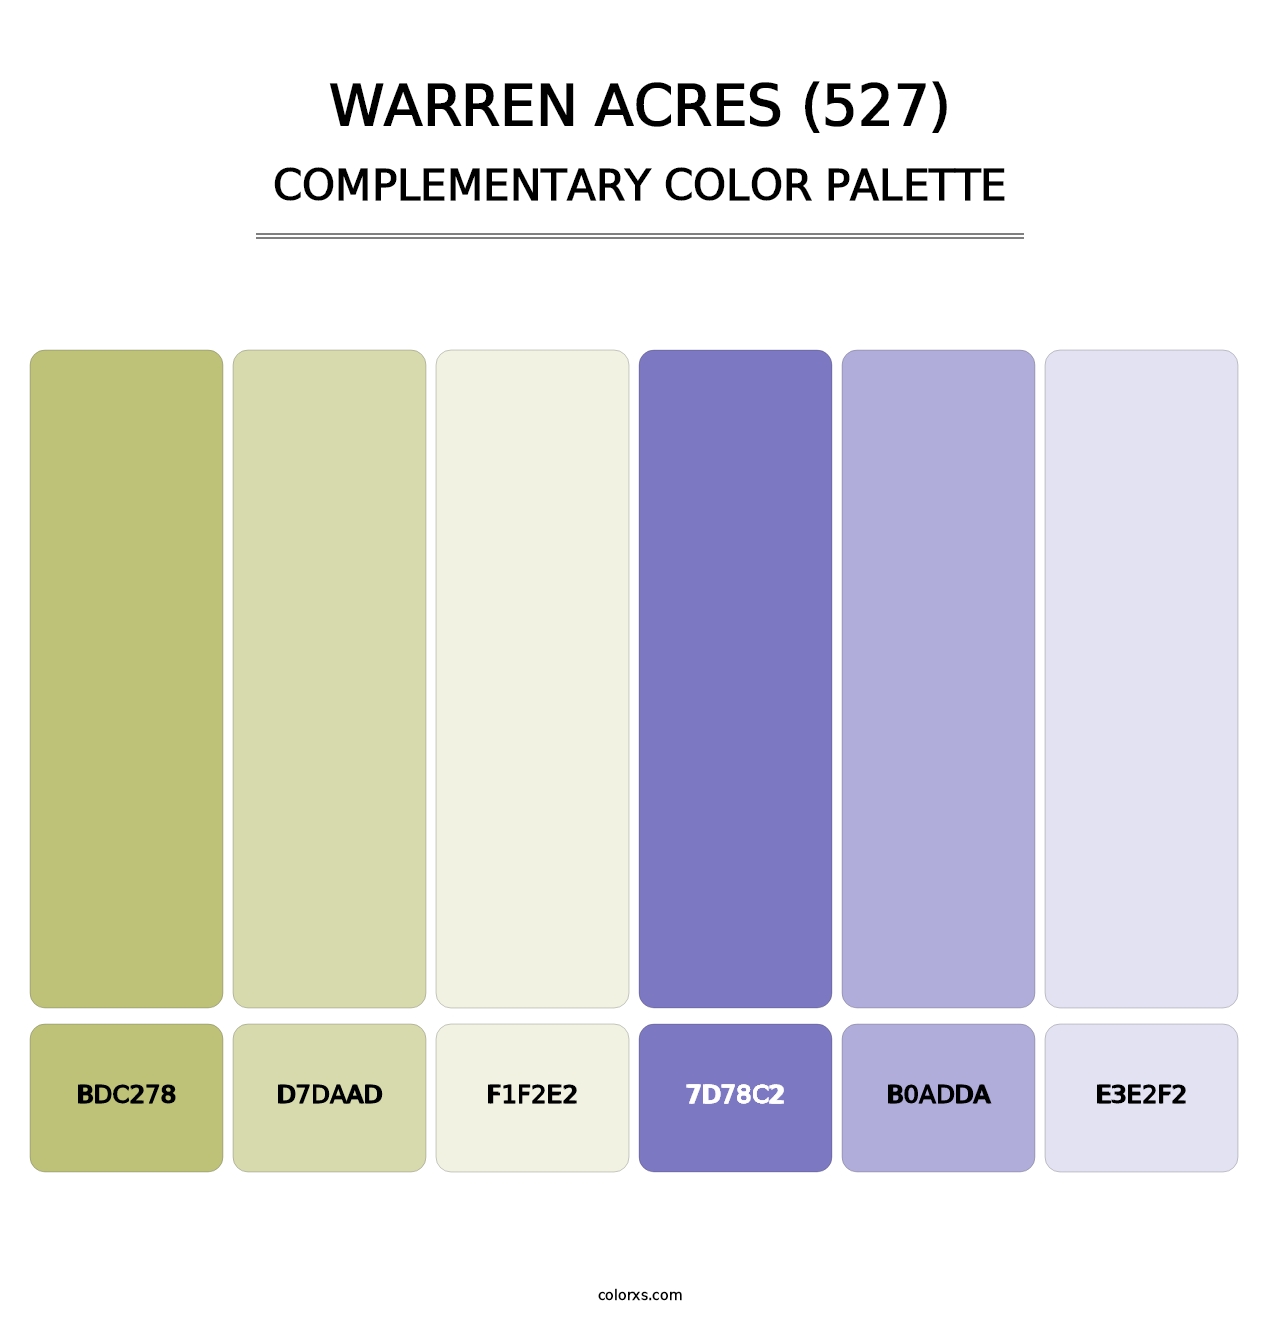 Warren Acres (527) - Complementary Color Palette